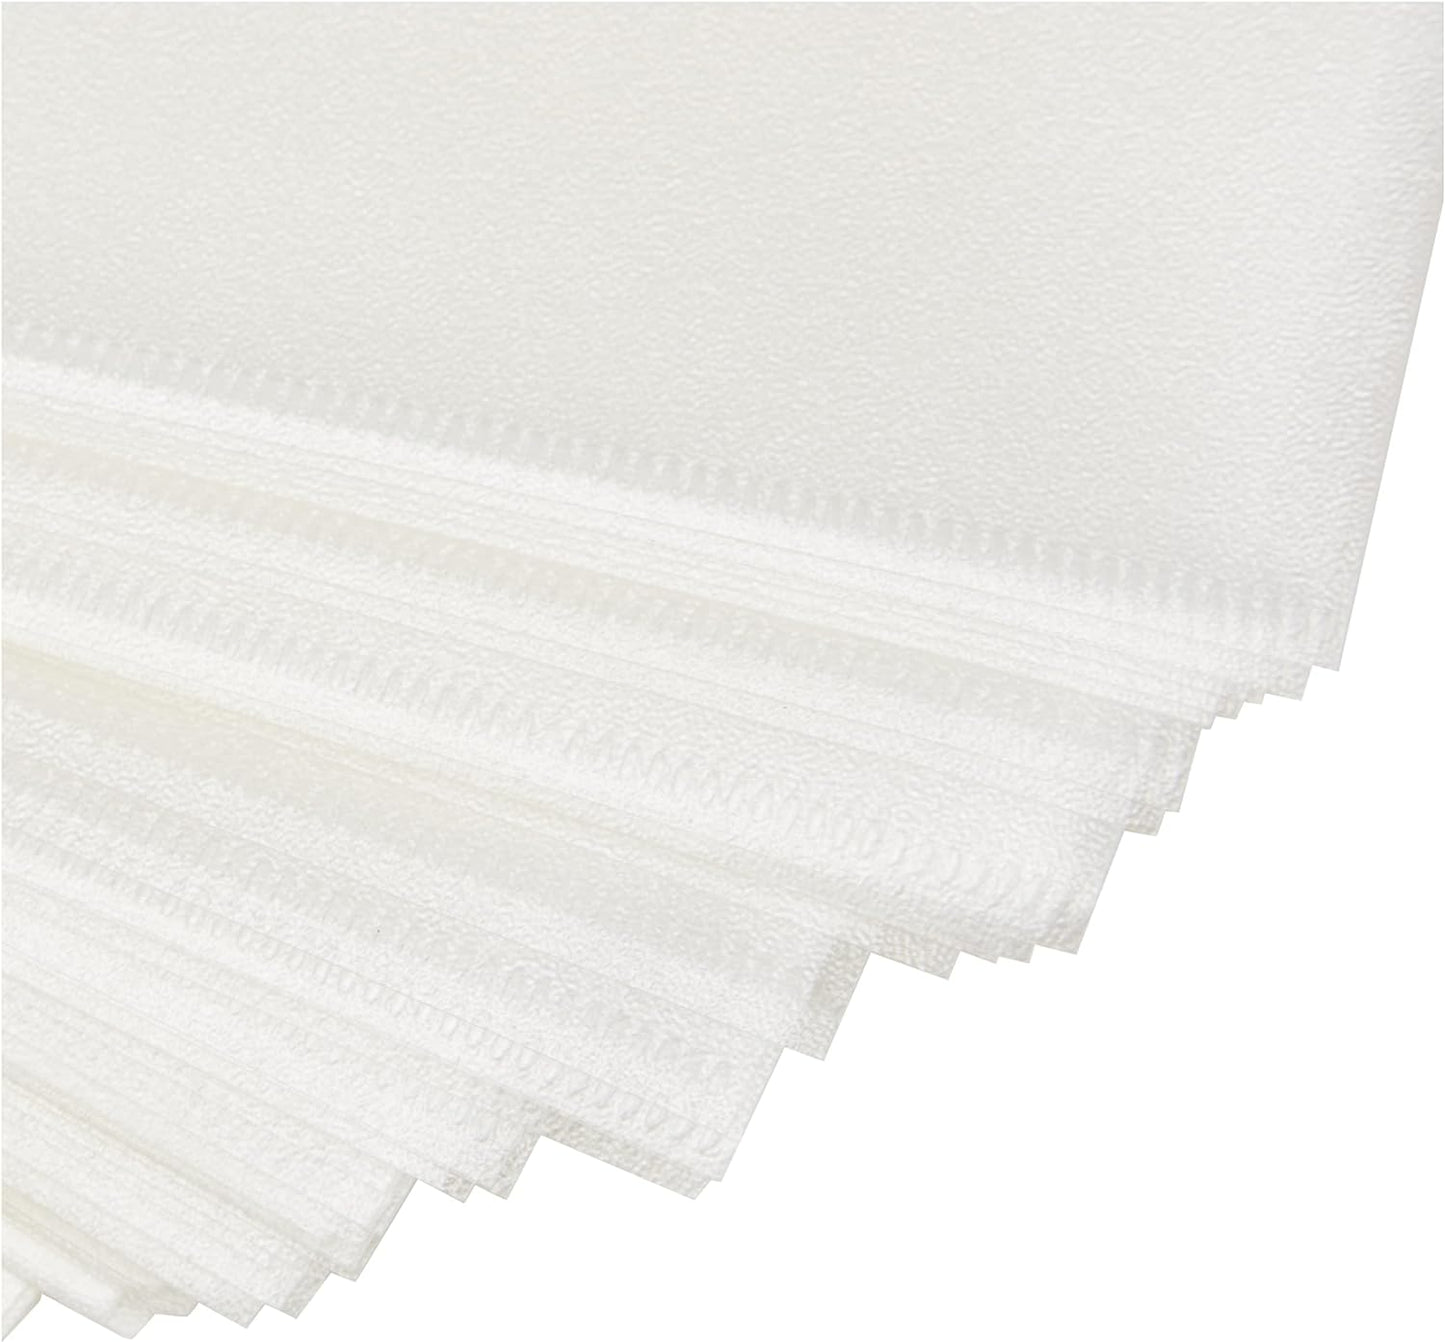 Pack of 100 A4 Clear Cut Flush Folders